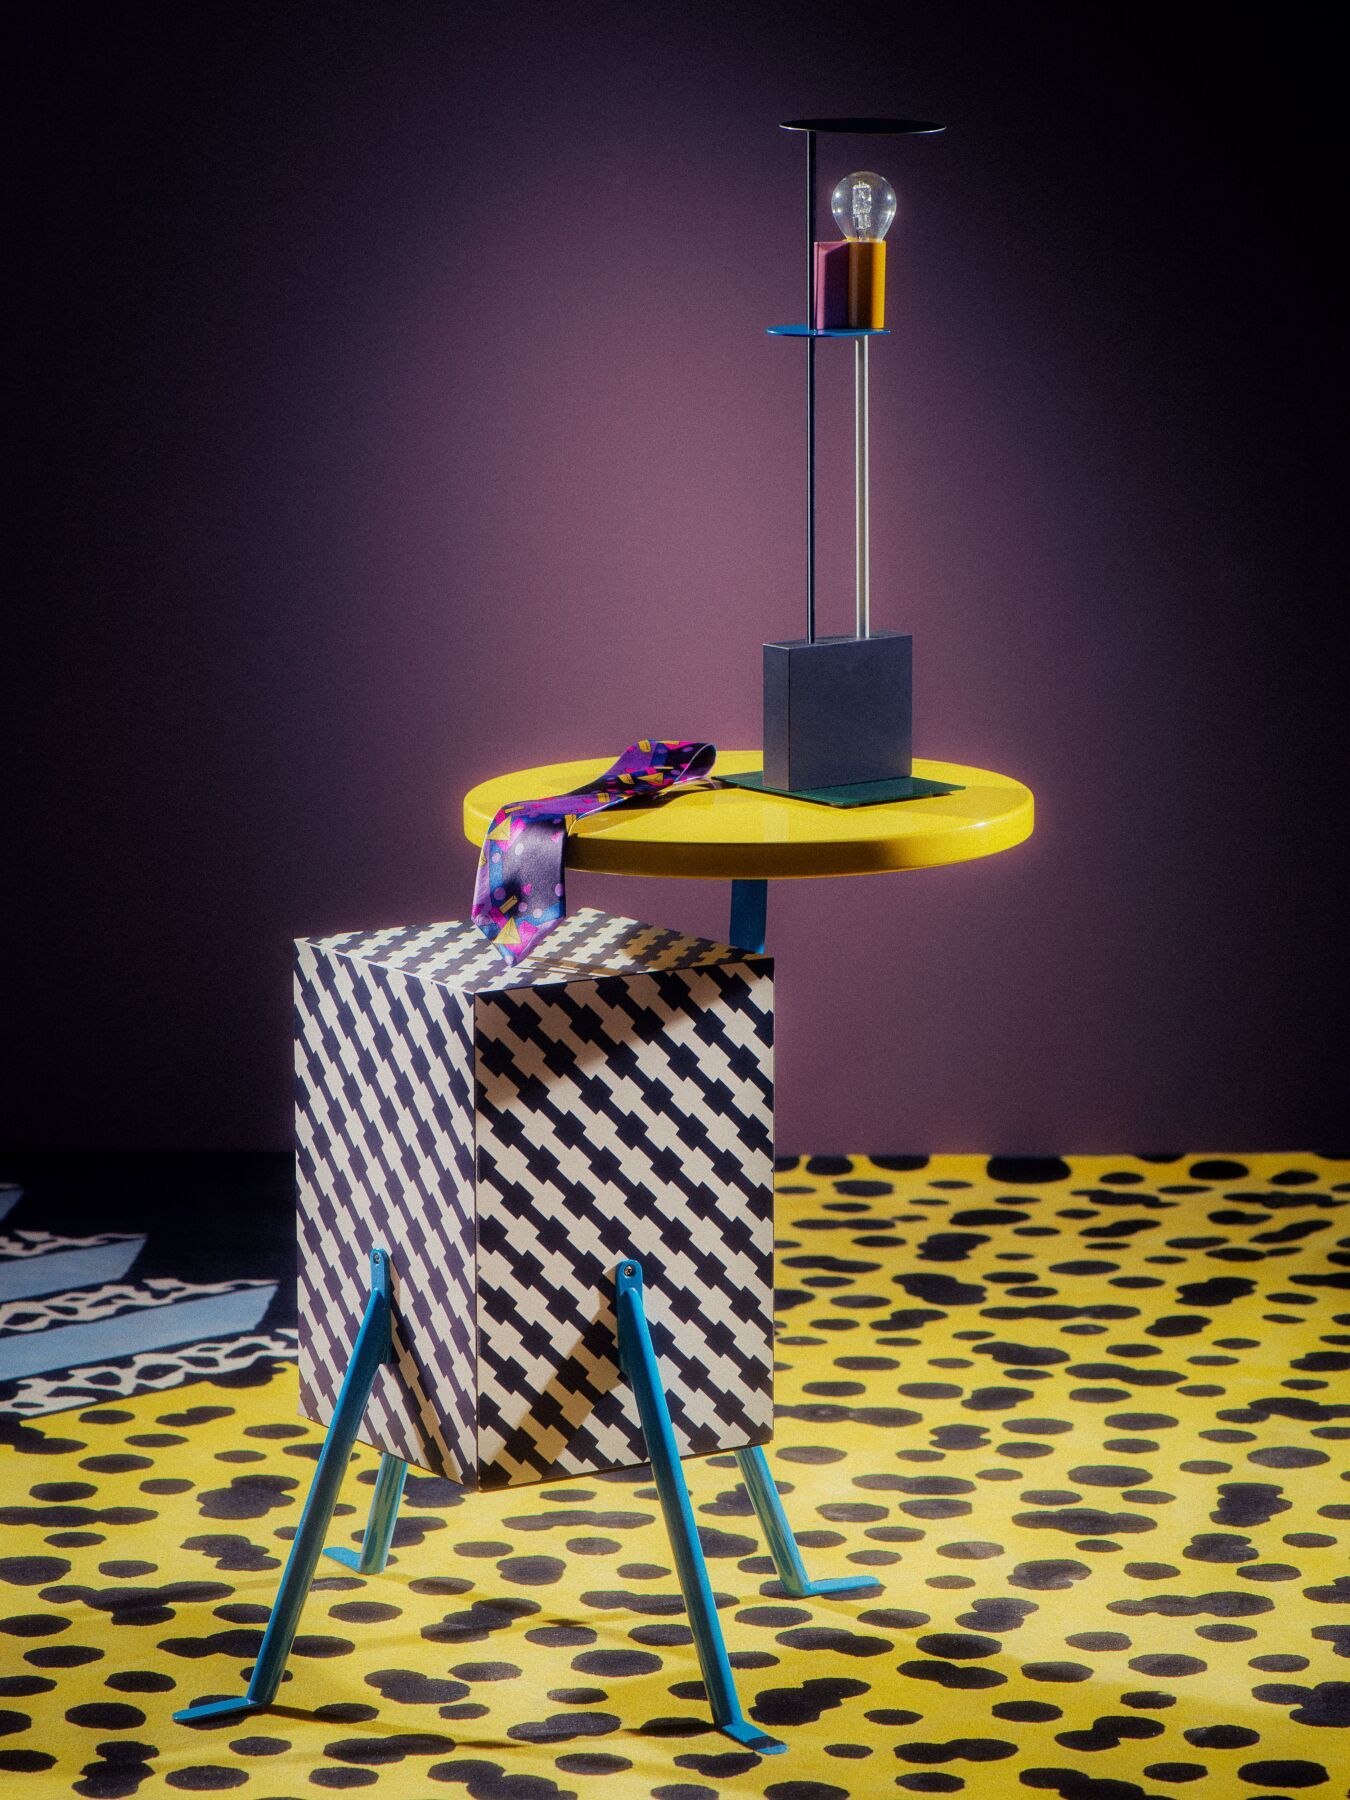 Null Michele DE LUCCHI (生于1951年)。
克里斯托尔边桌--1981年创作的模型。
木质结构和塑料层压板，漆面金属。
孟菲斯米兰版。
&hellip;